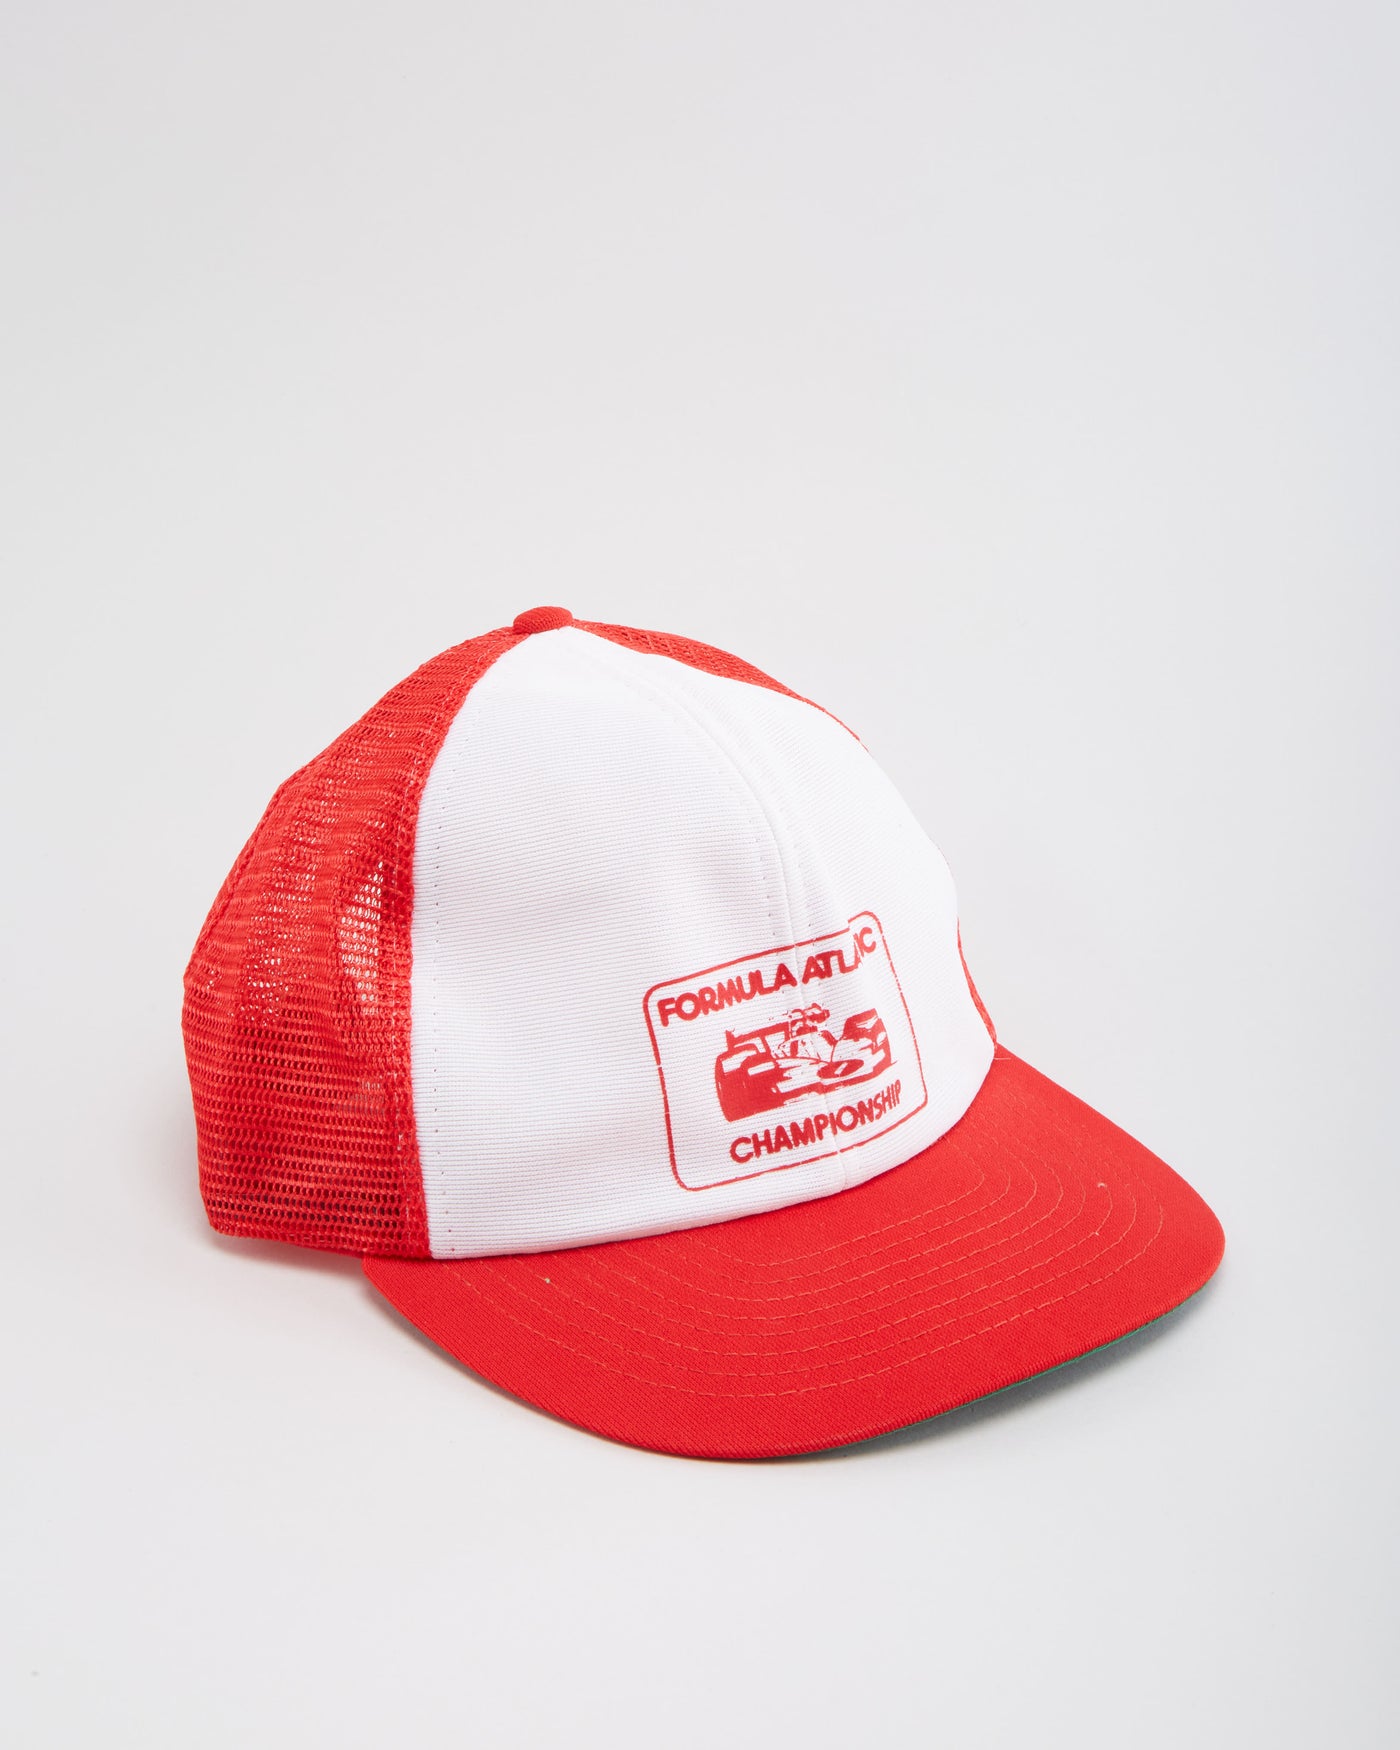 Vintage 80s Formula Atlantic Championship Red / White Trucker Hat